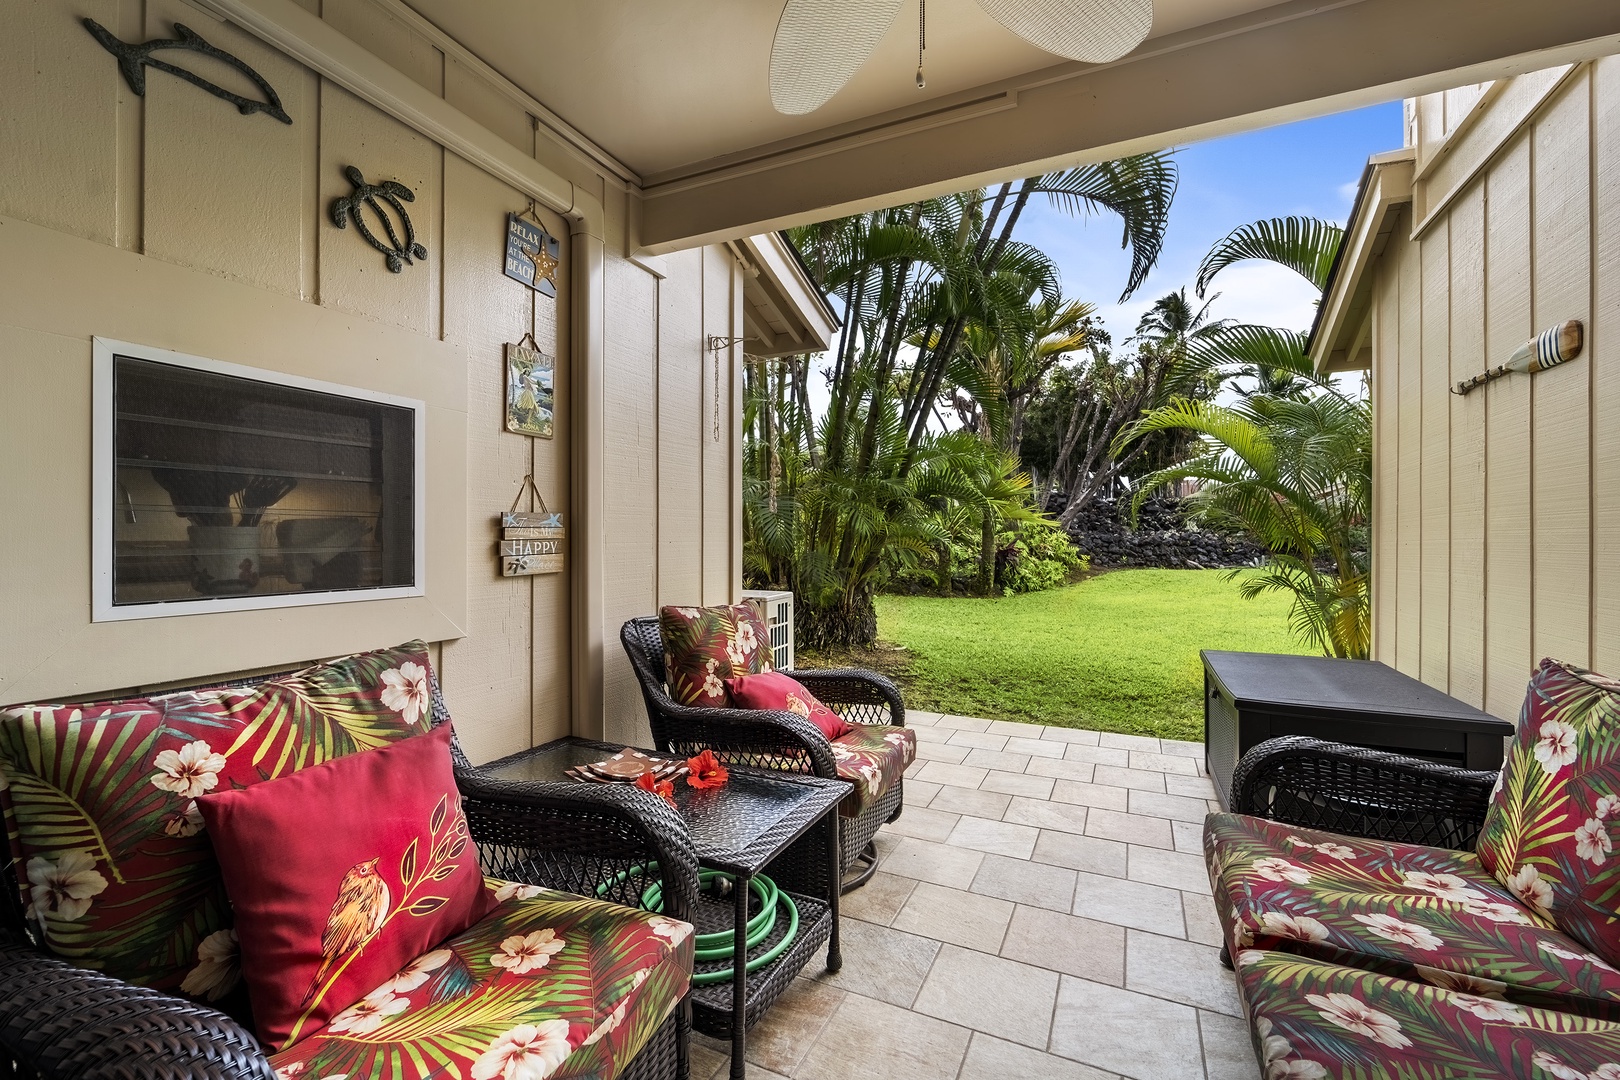 Kailua Kona Vacation Rentals, Keauhou Kona Surf & Racquet #48 - Comfortable seating on the Lanai